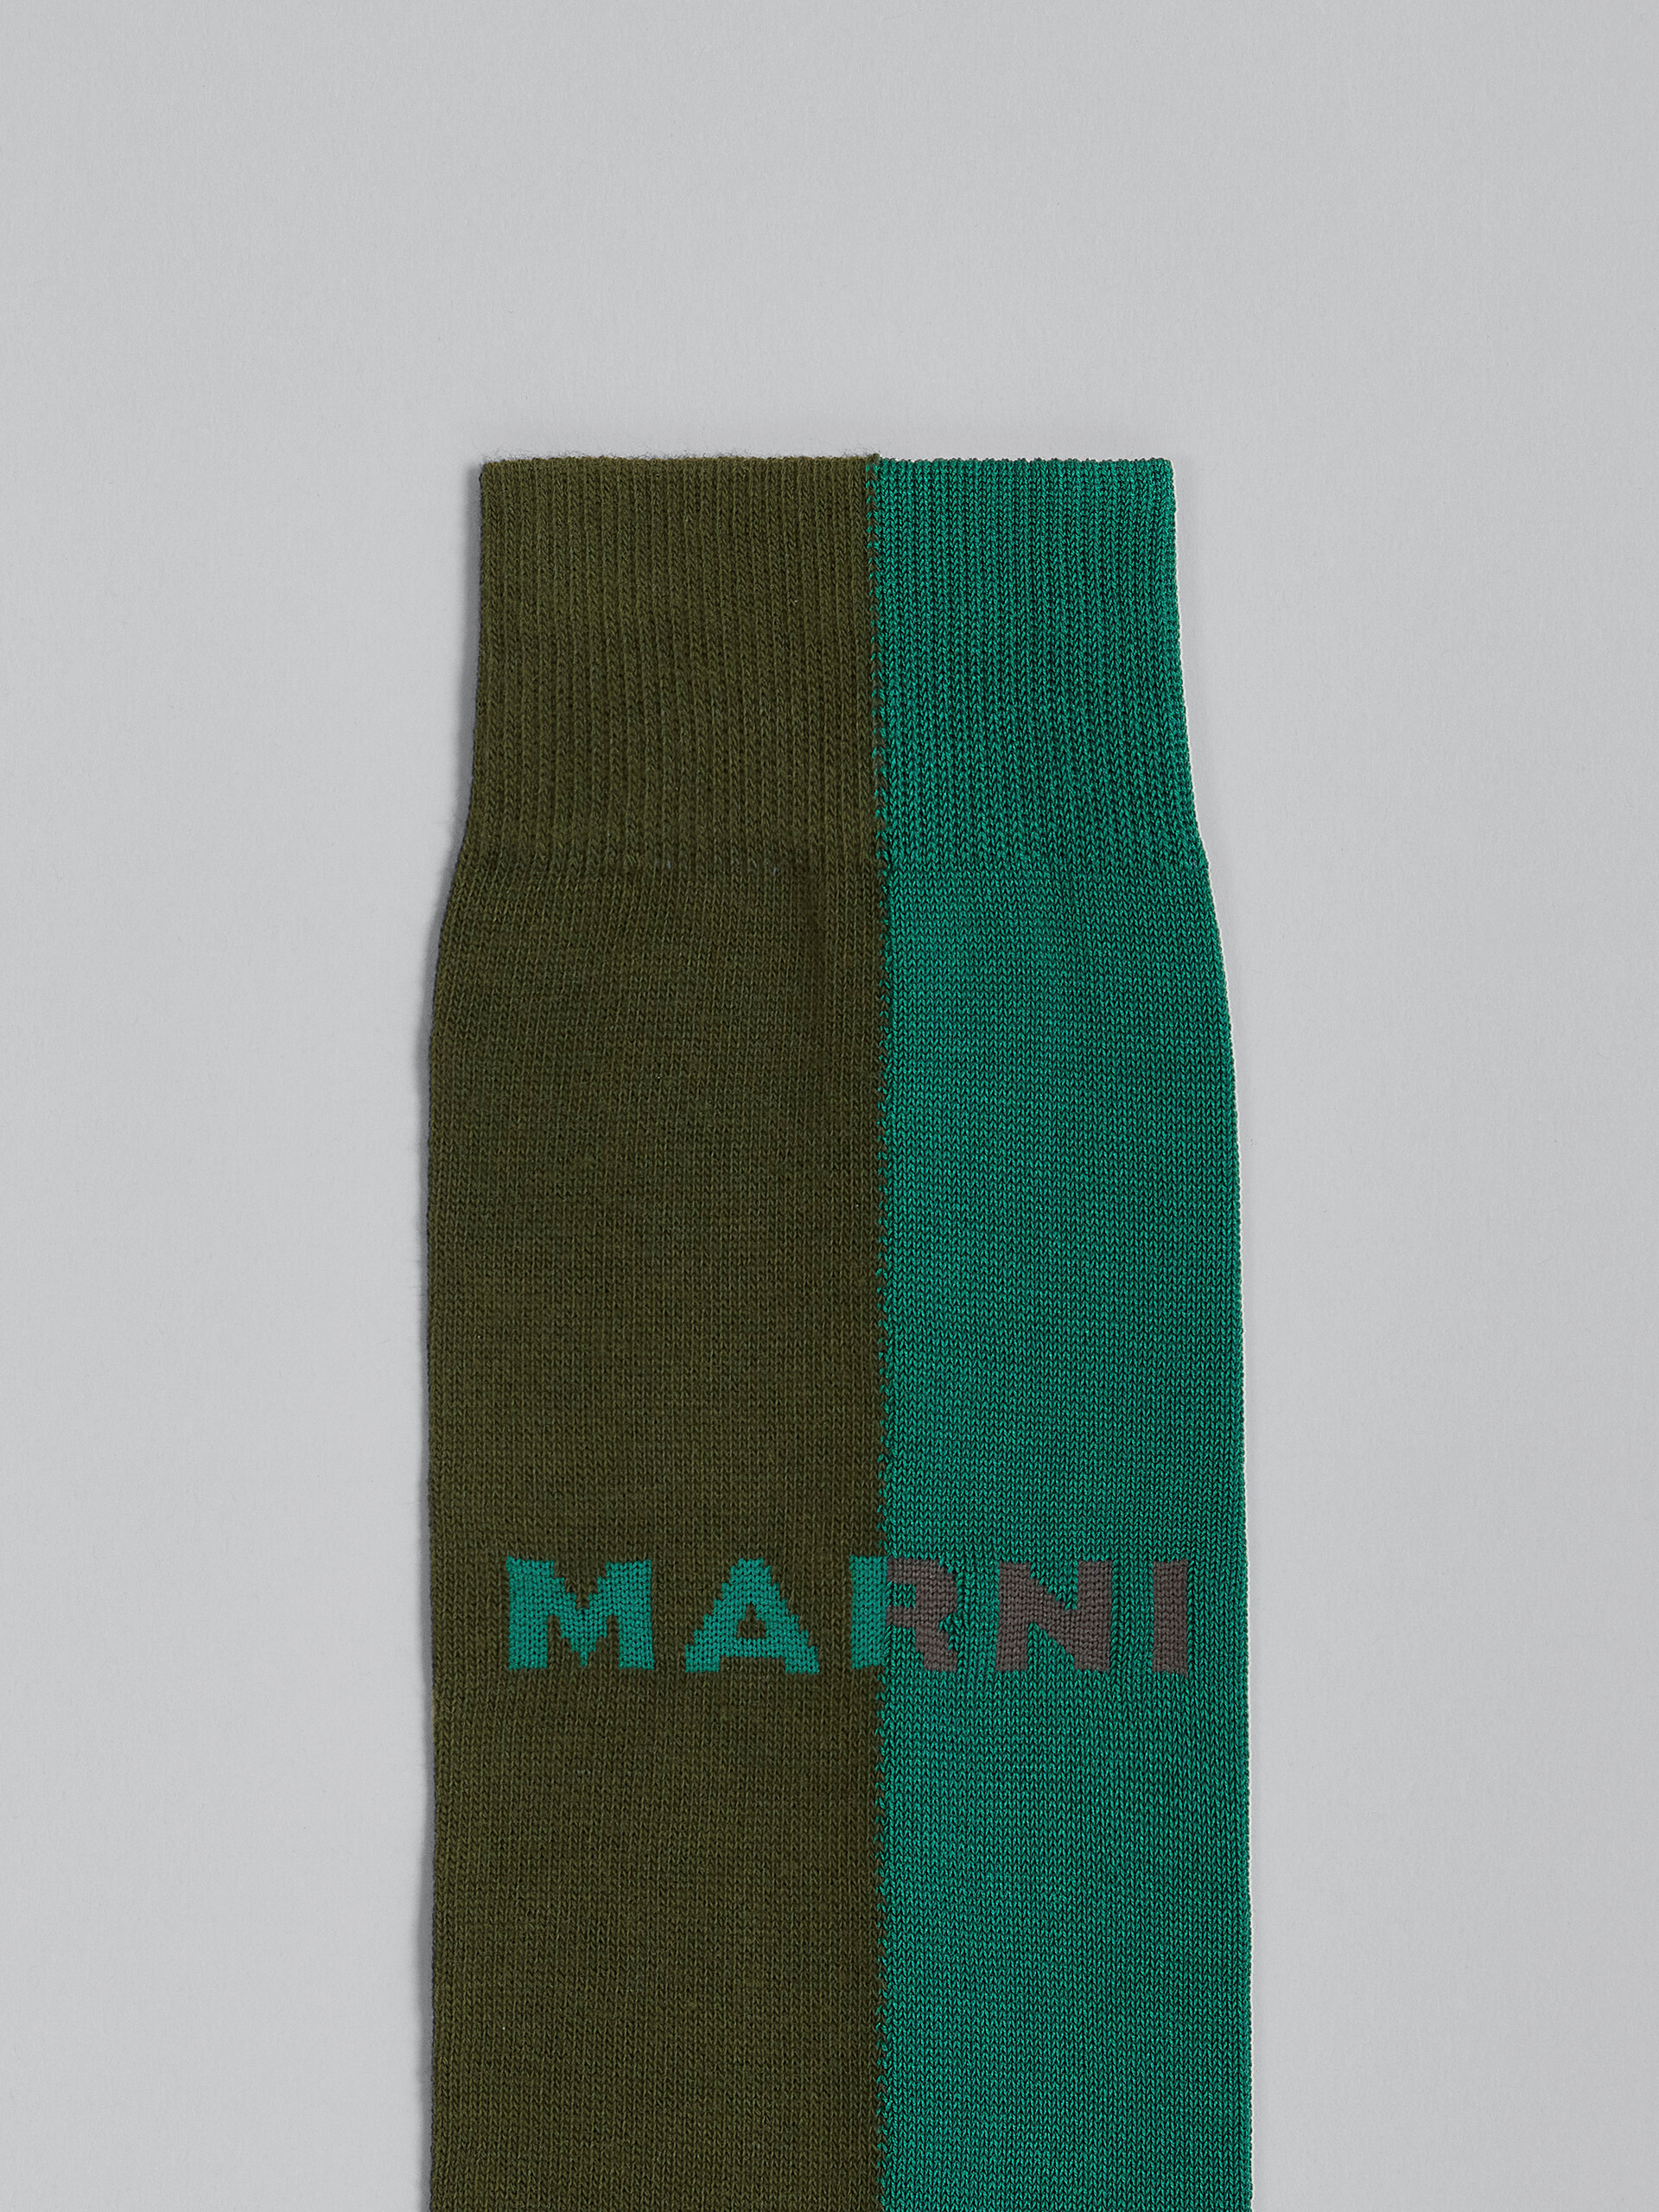 Green bi-coloured cotton and nylon socks - Socks - Image 3